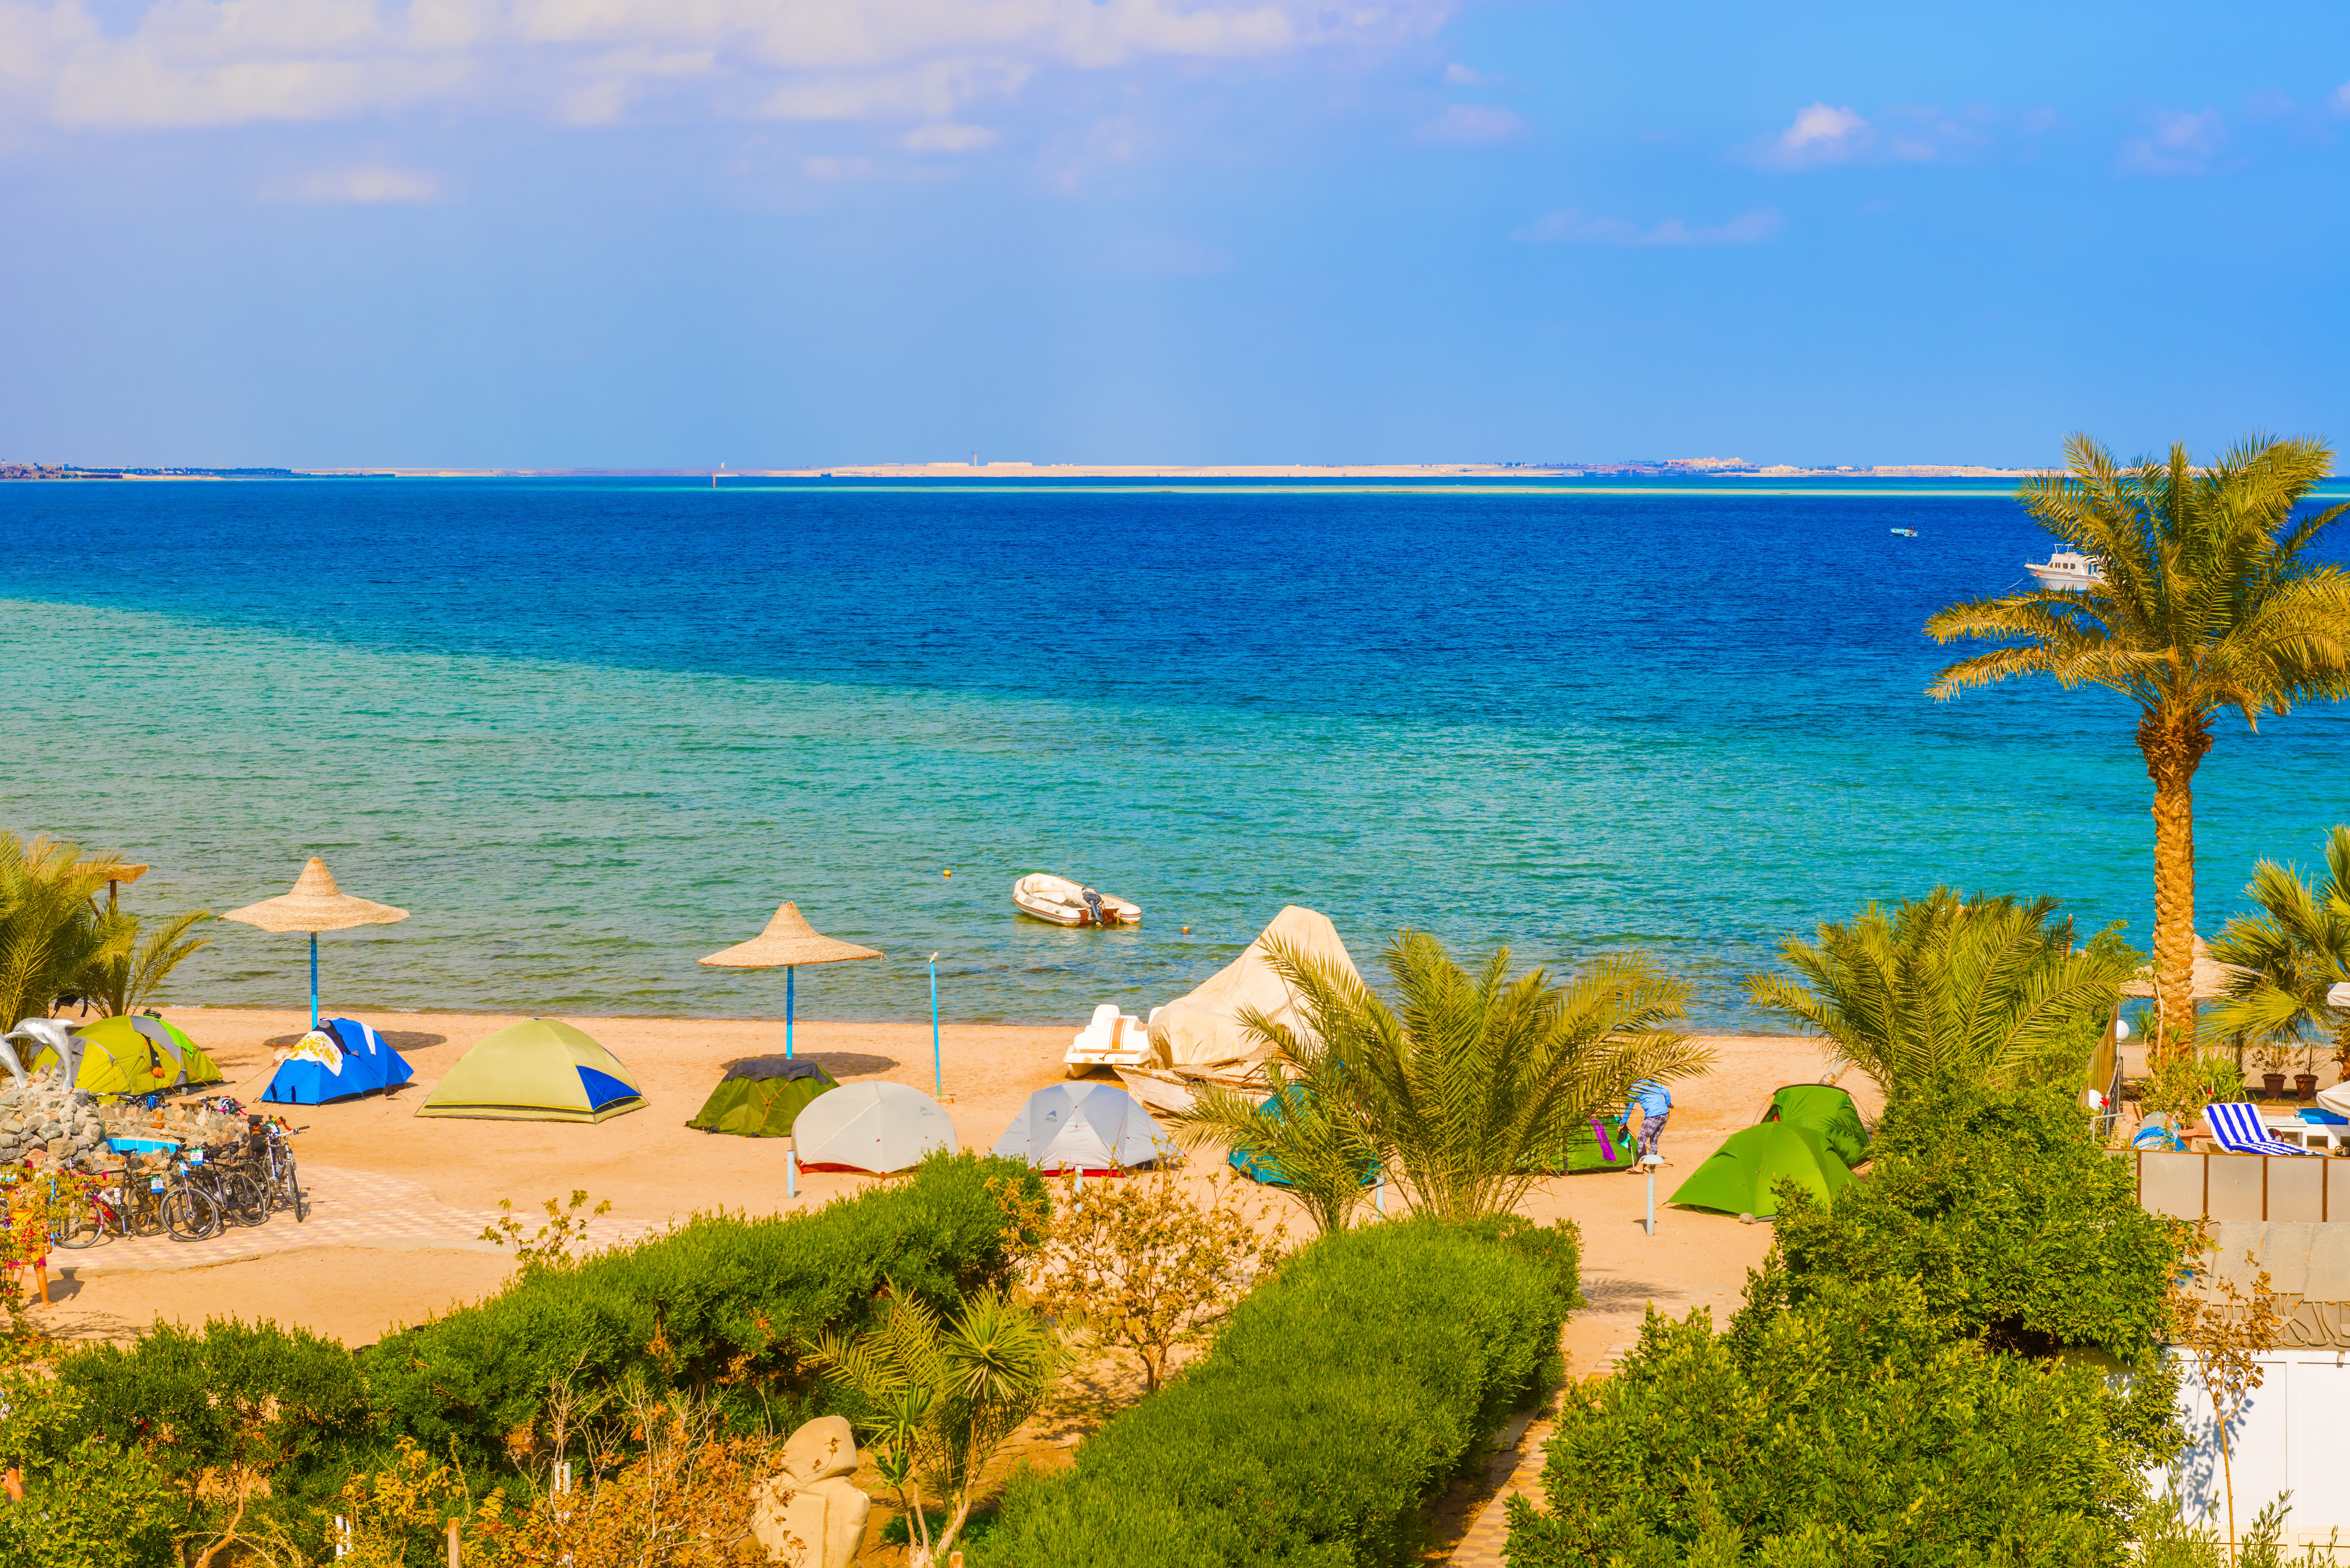 Golden sand beach, palm trees and beautiful blue sea of Safaga, Egypt.